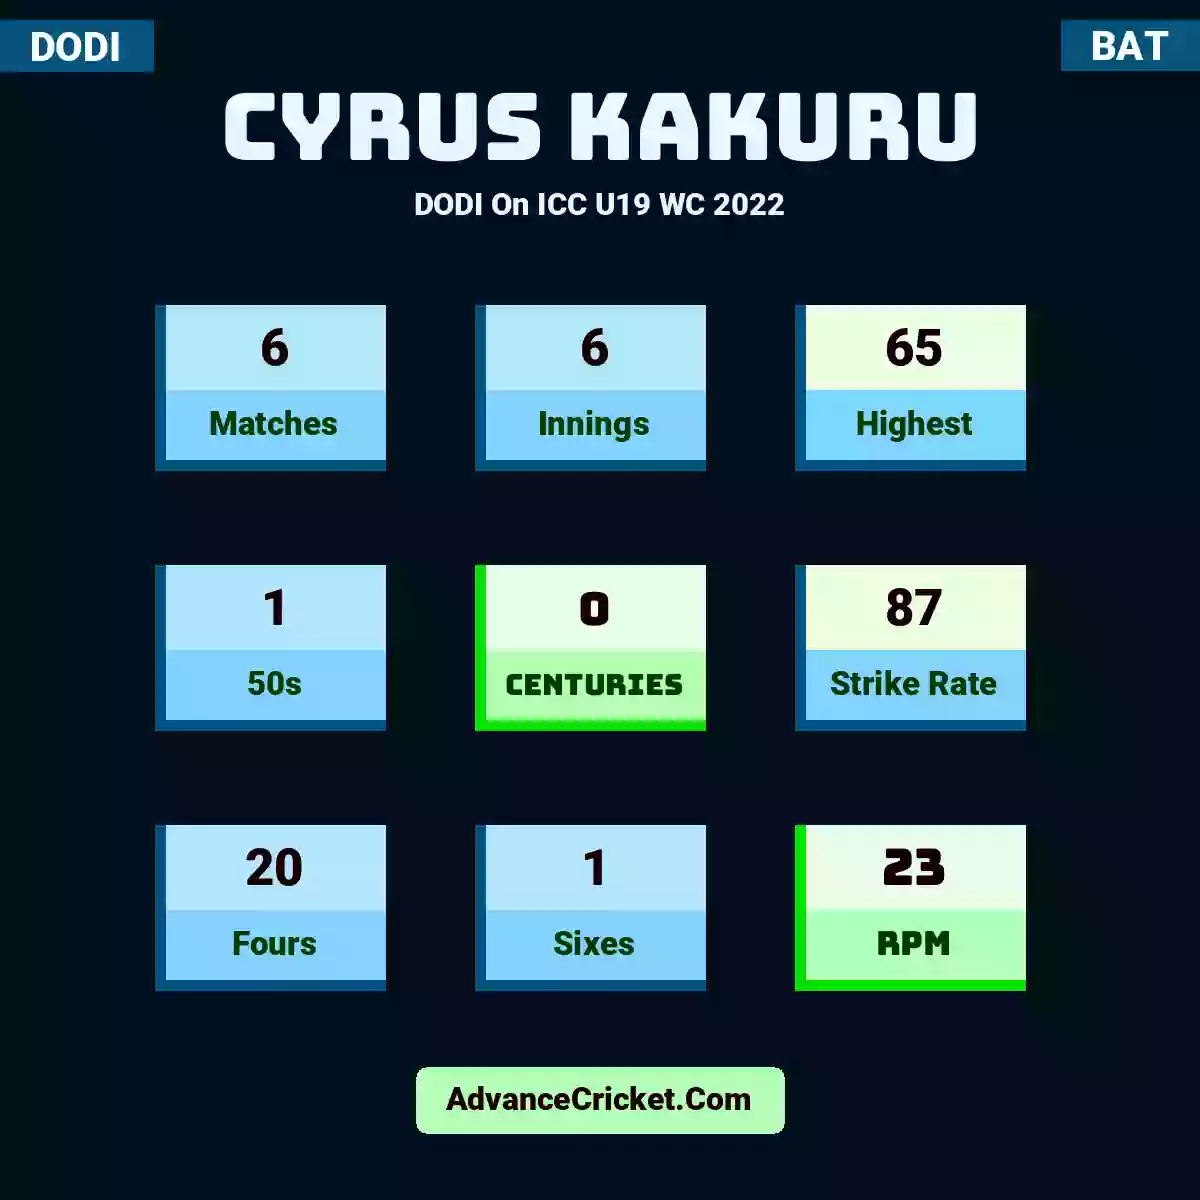 Cyrus Kakuru DODI  On ICC U19 WC 2022, Cyrus Kakuru played 6 matches, scored 65 runs as highest, 1 half-centuries, and 0 centuries, with a strike rate of 87. C.Kakuru hit 20 fours and 1 sixes, with an RPM of 23.